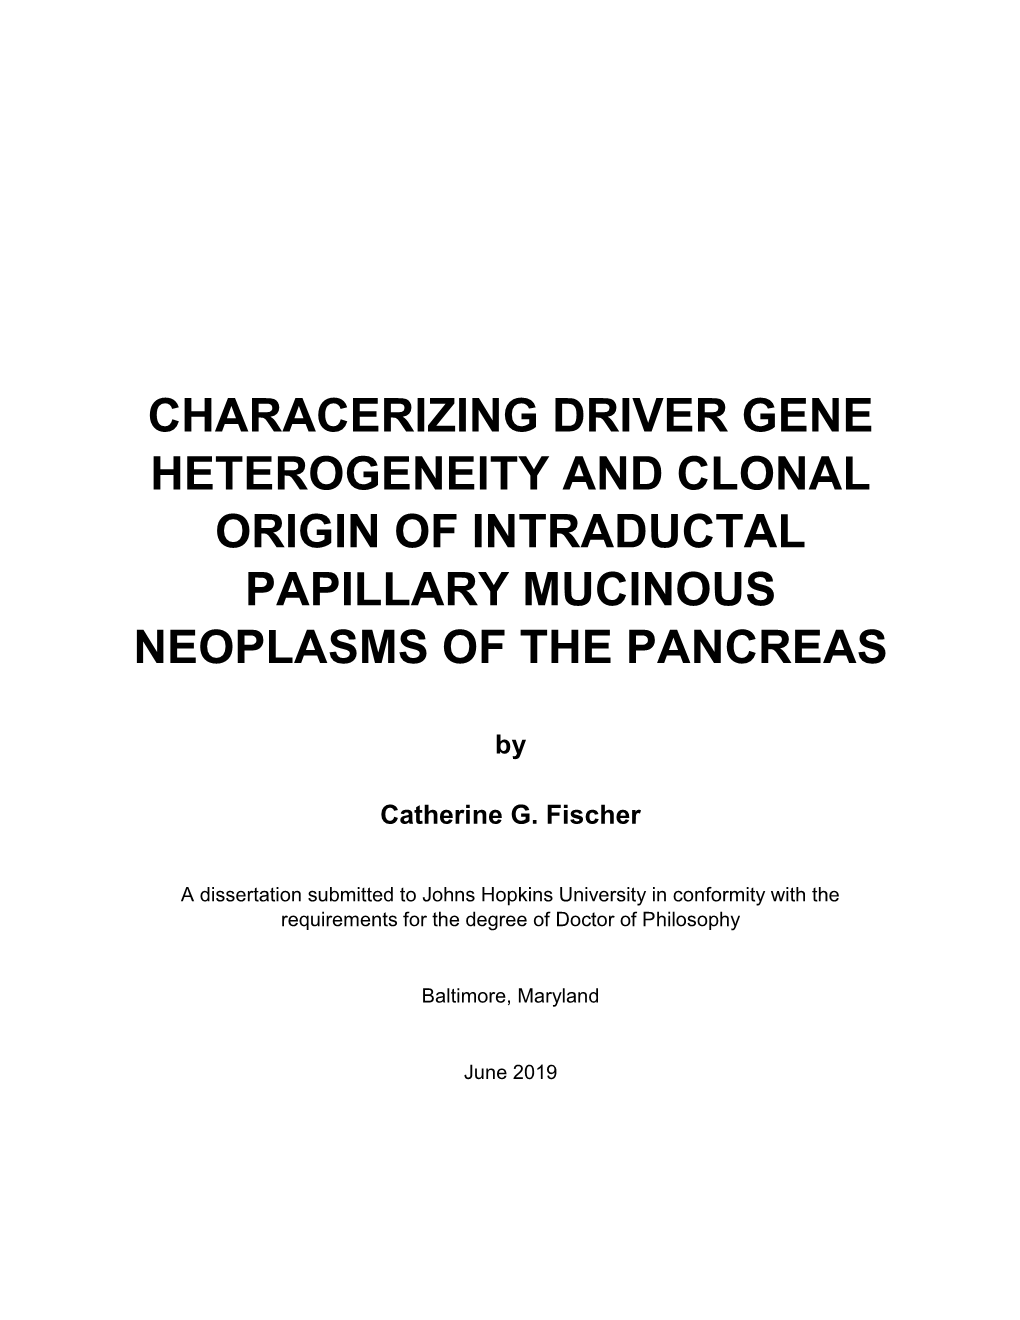 Characerizing Driver Gene Heterogeneity and Clonal Origin of Intraductal Papillary Mucinous Neoplasms of the Pancreas